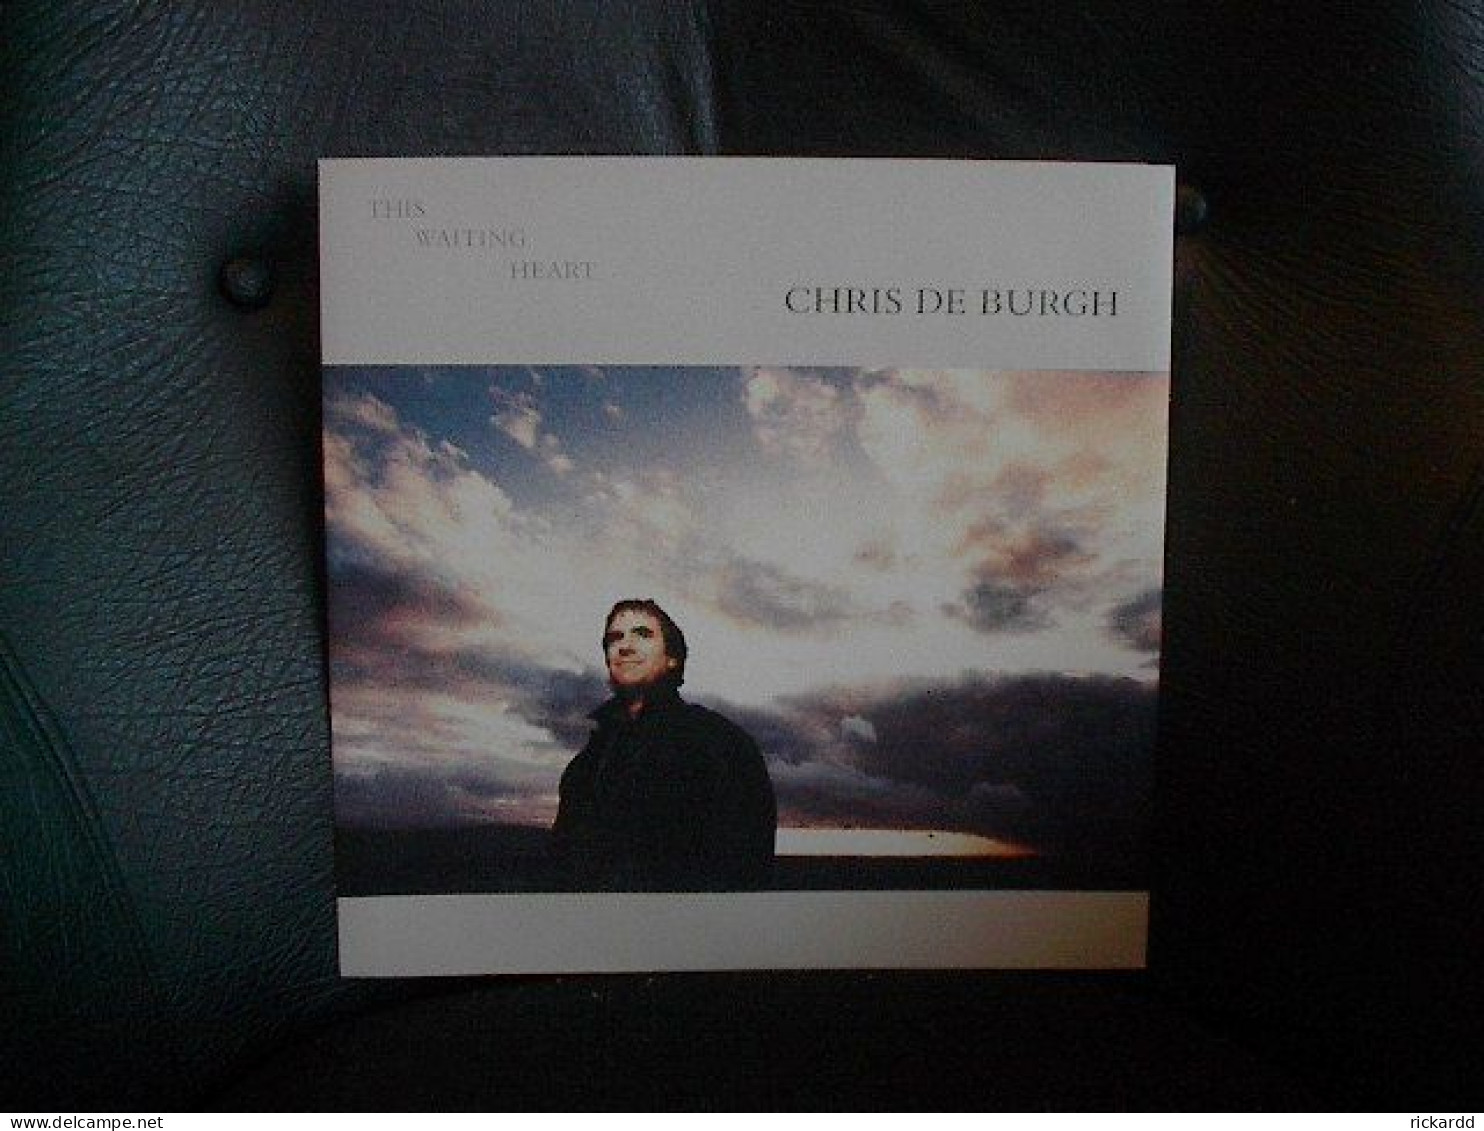 Chris De Burgh - This Waiting Heart (MAXI) Like New - 45 G - Maxi-Single